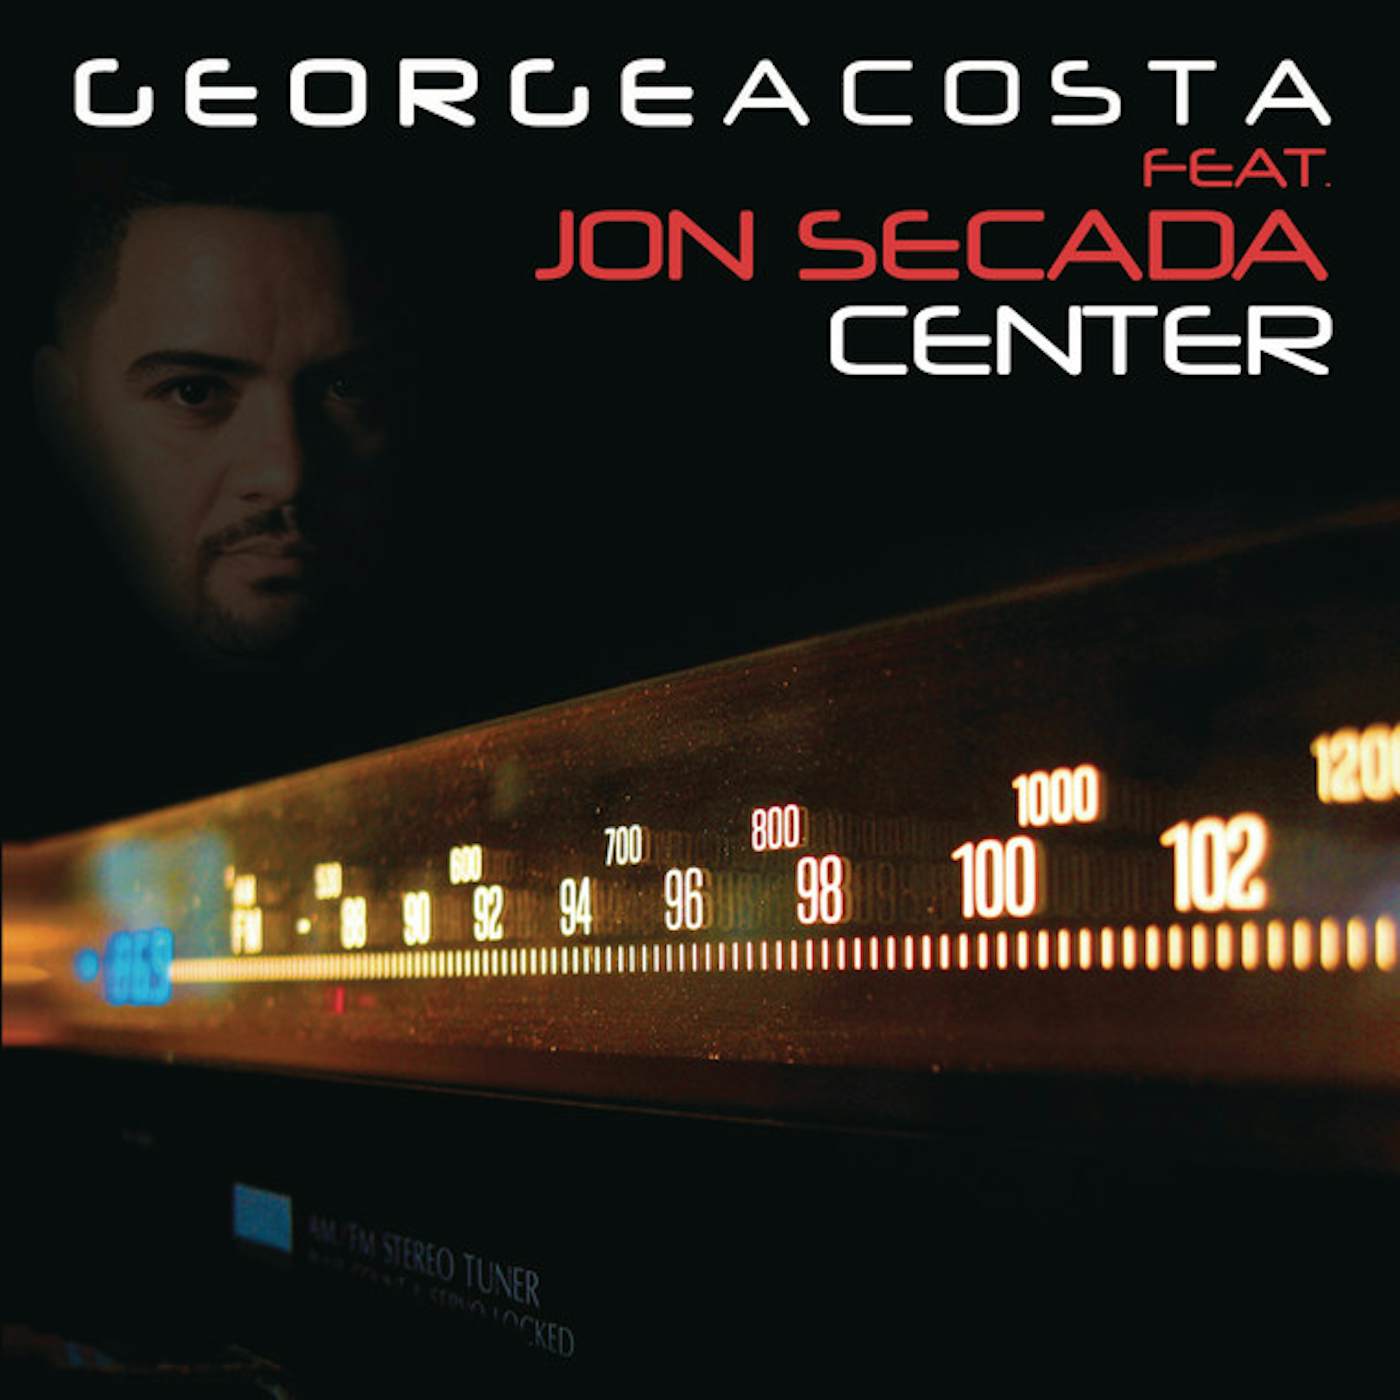 George Acosta Center Vinyl Record